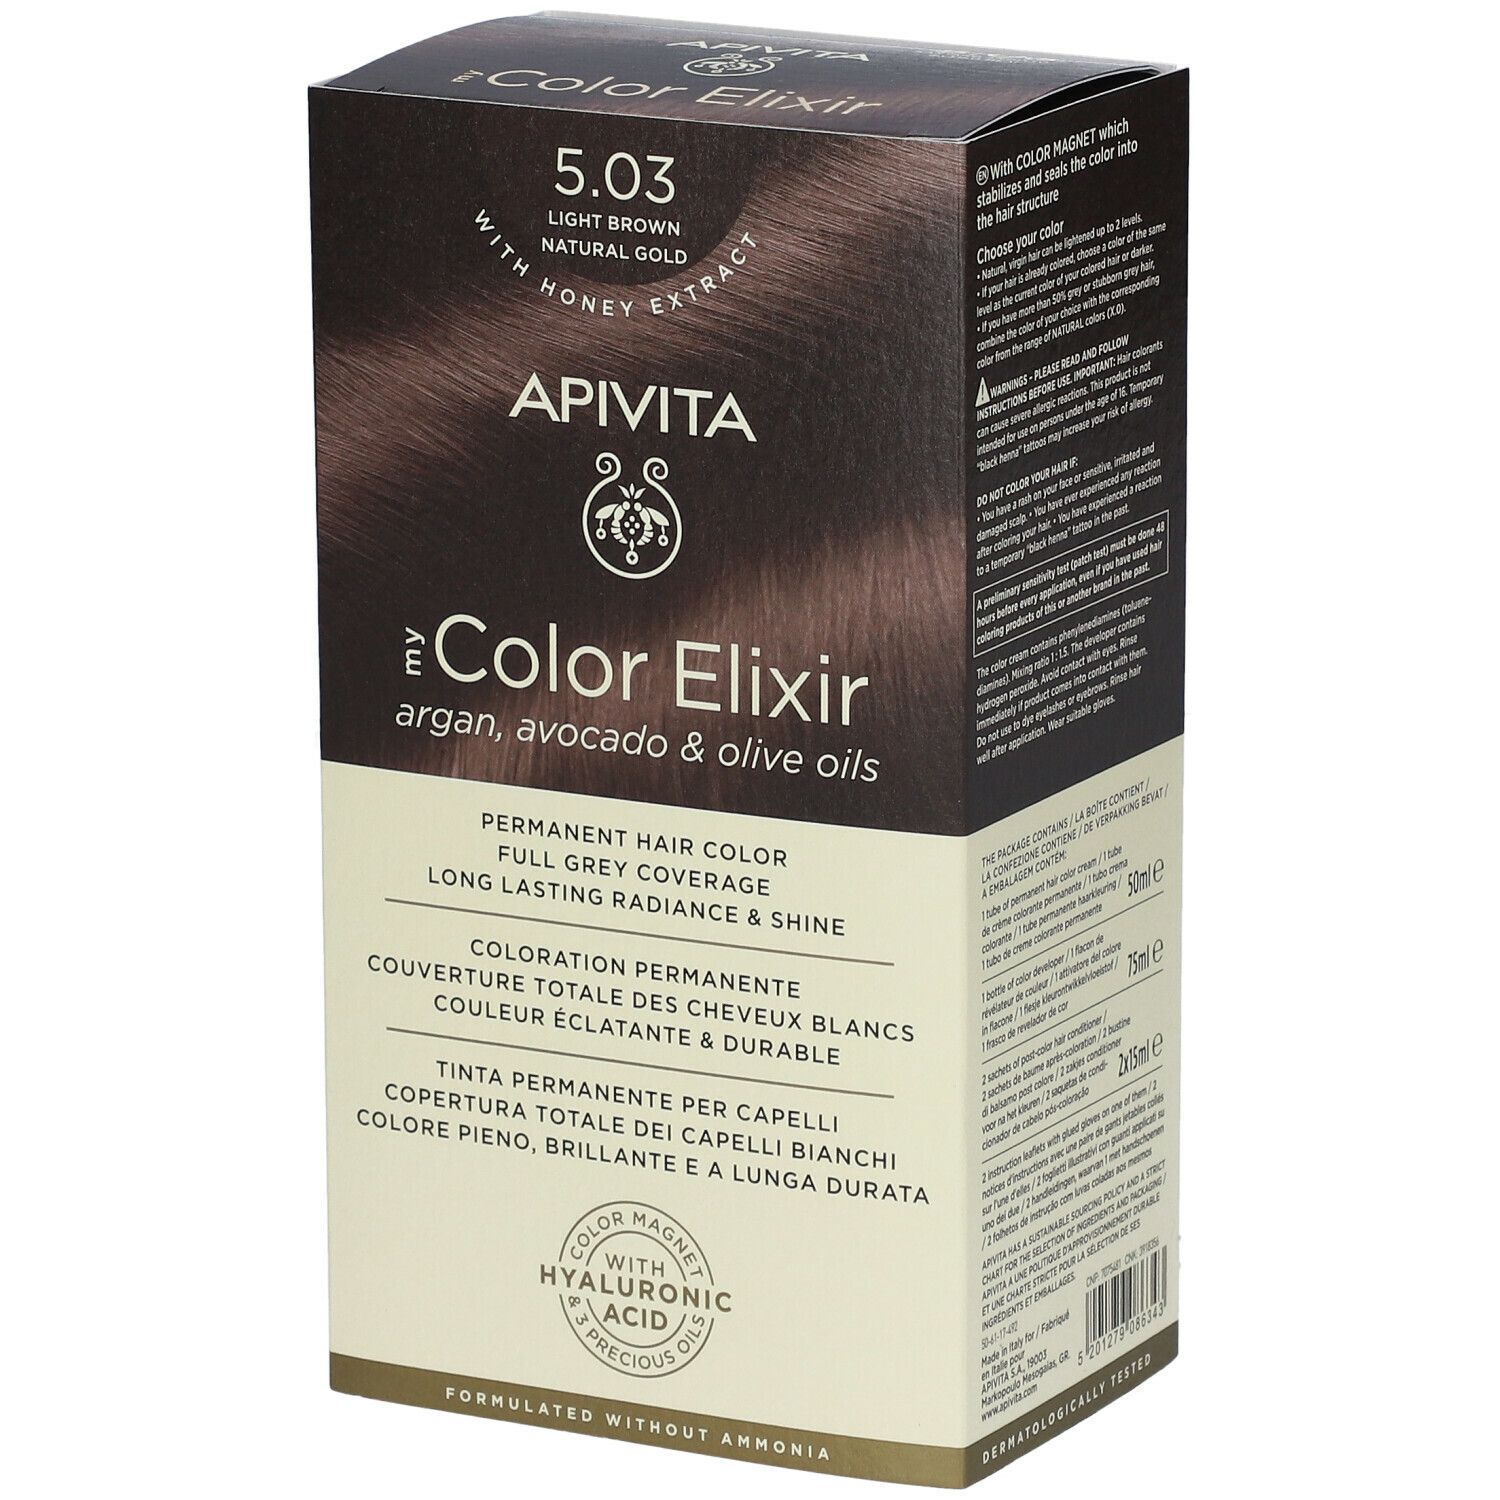 Apivita My Color Elixir 5.03 Marron claire Natural Gold